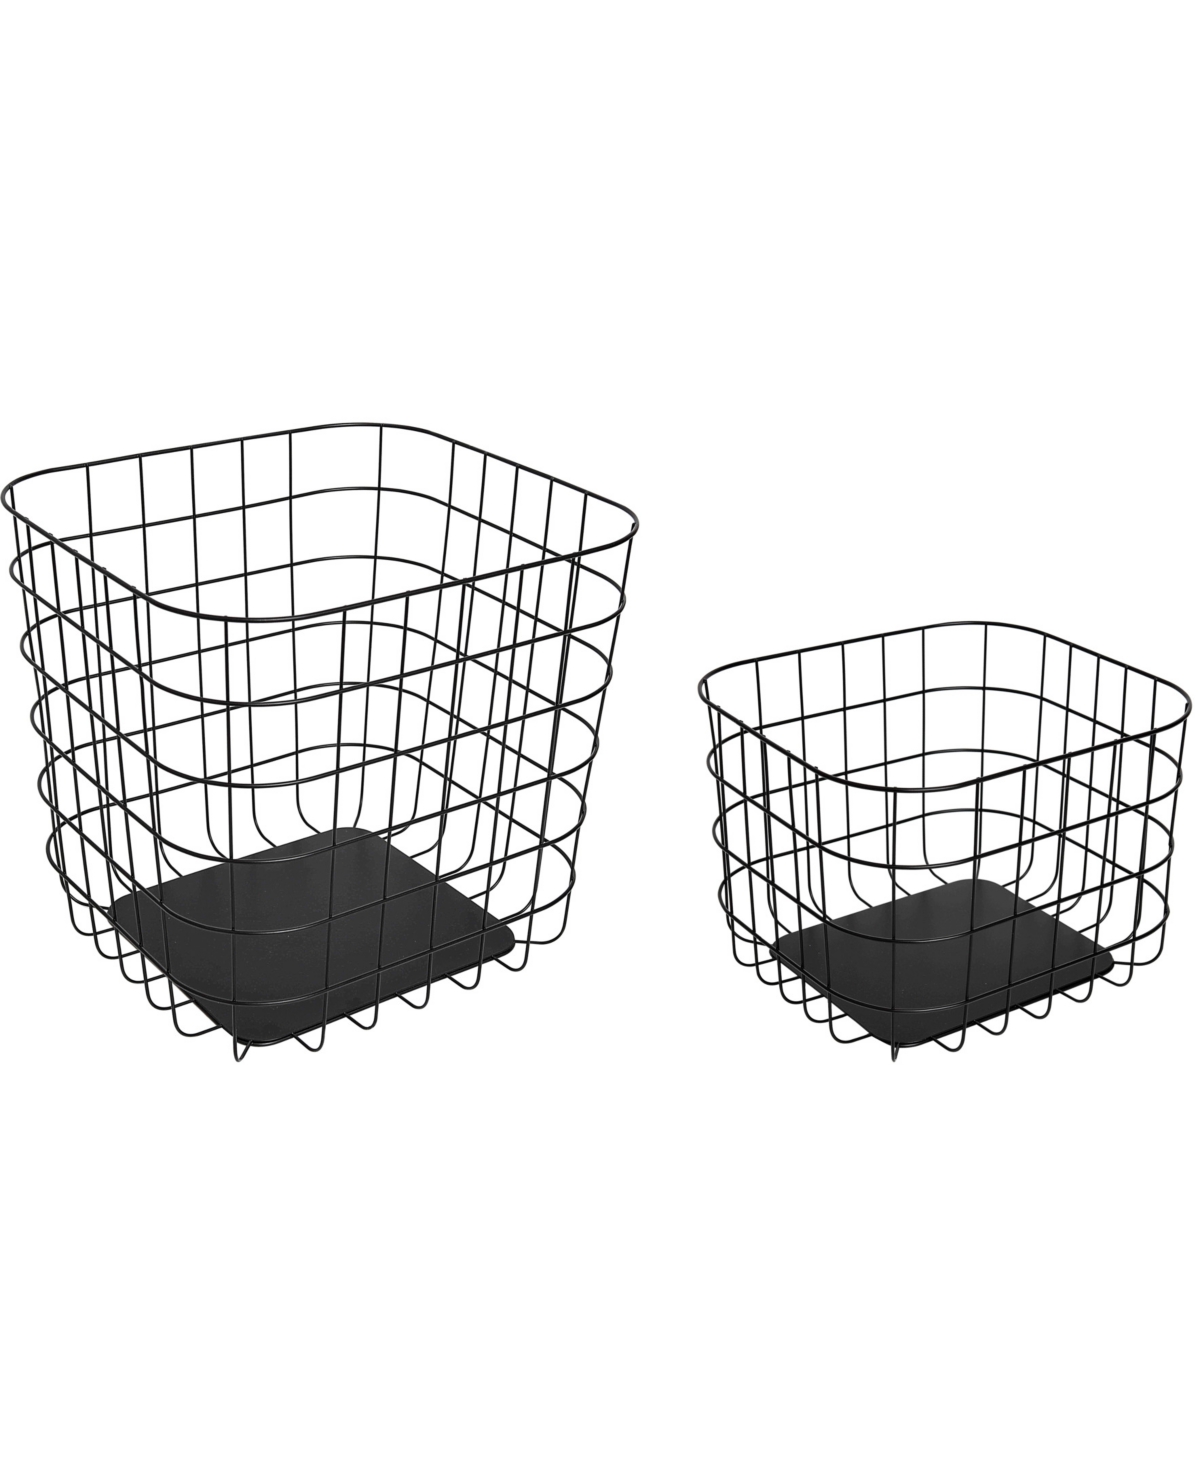 Wethinkstorage Set Of 2 Metal Baskets With Iron Board, 14.5-liter And 32-liter In Black